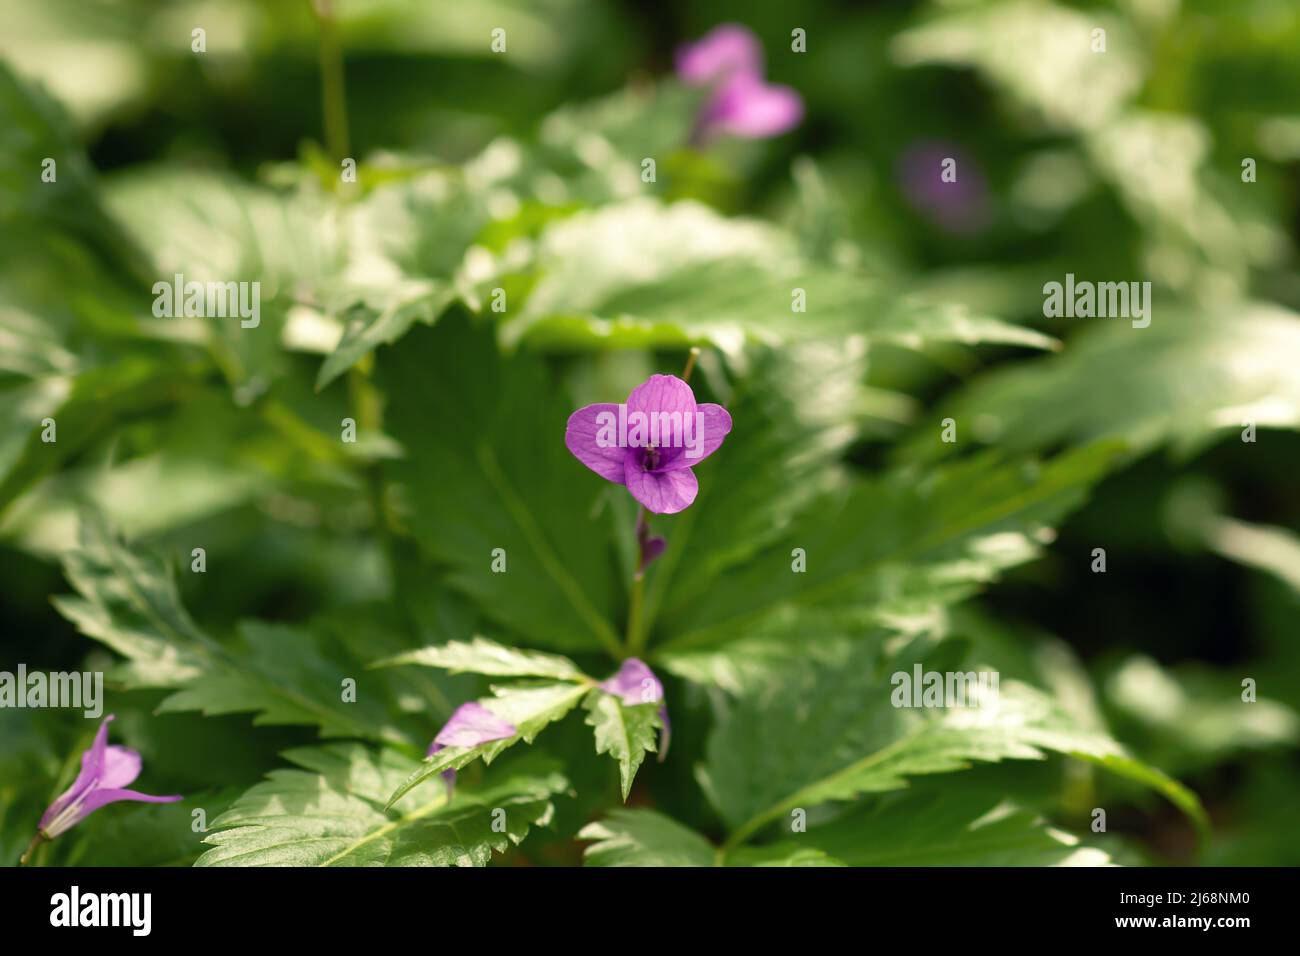 Dentaria glandulosa small purple forest wild flower. Little violet Cardamine wildflower growing in spring woodland, top view Stock Photo